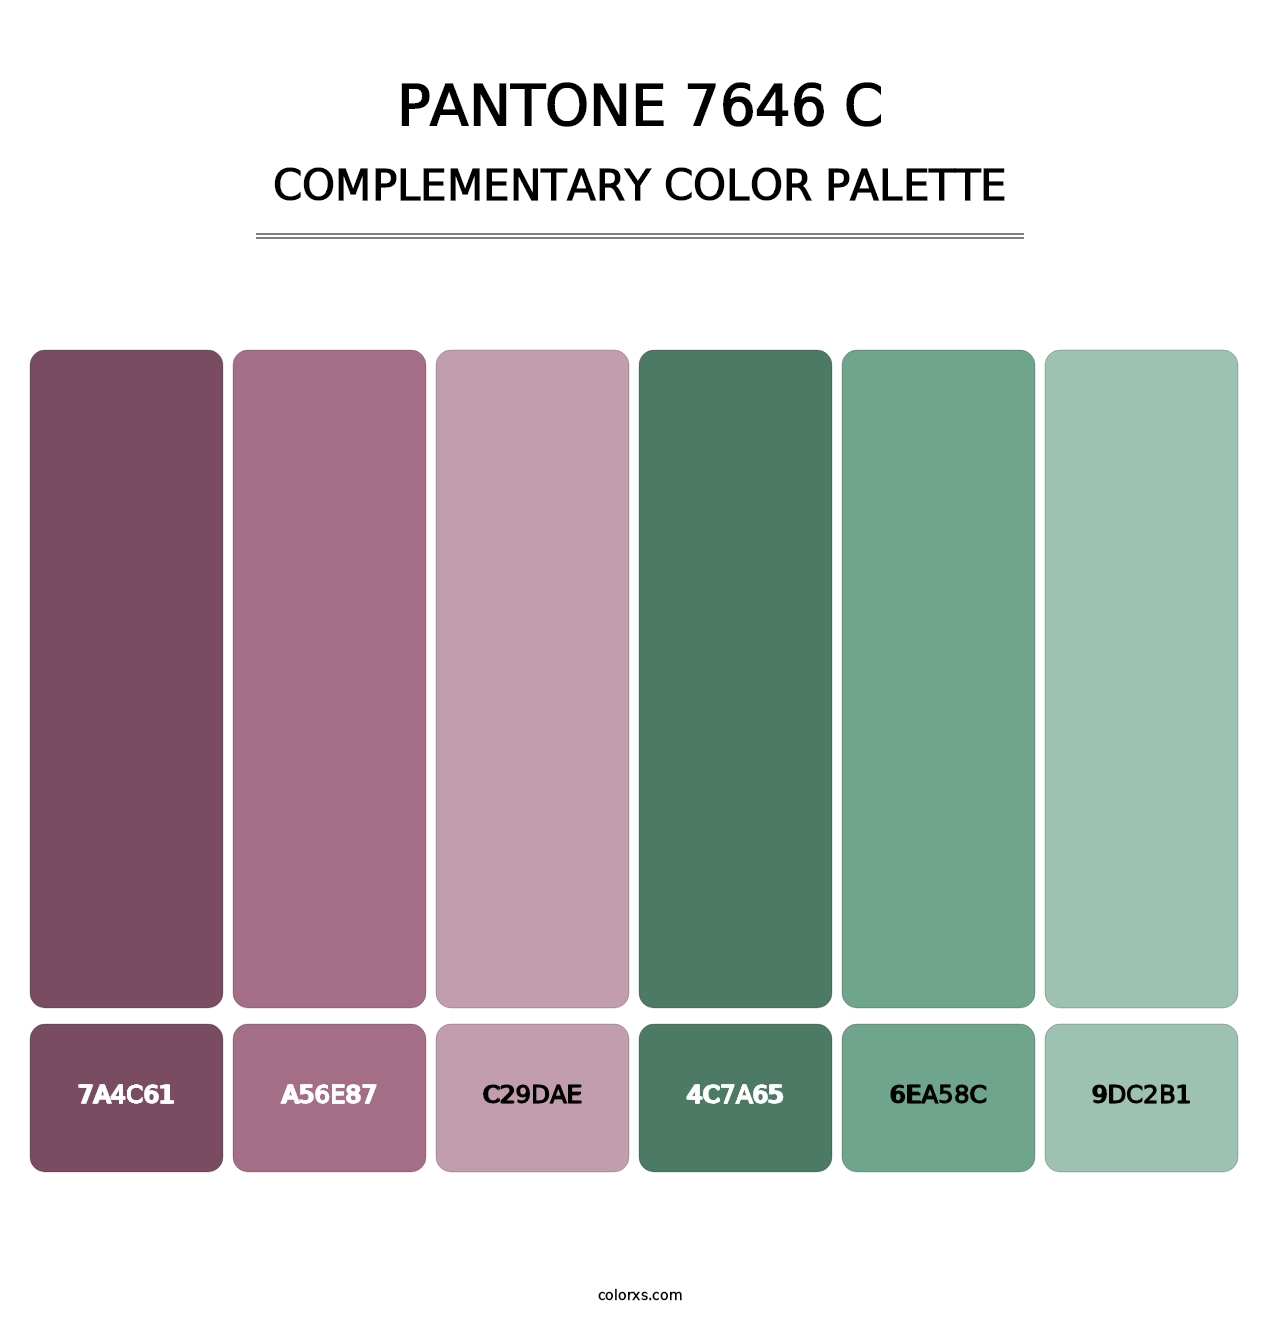 PANTONE 7646 C - Complementary Color Palette